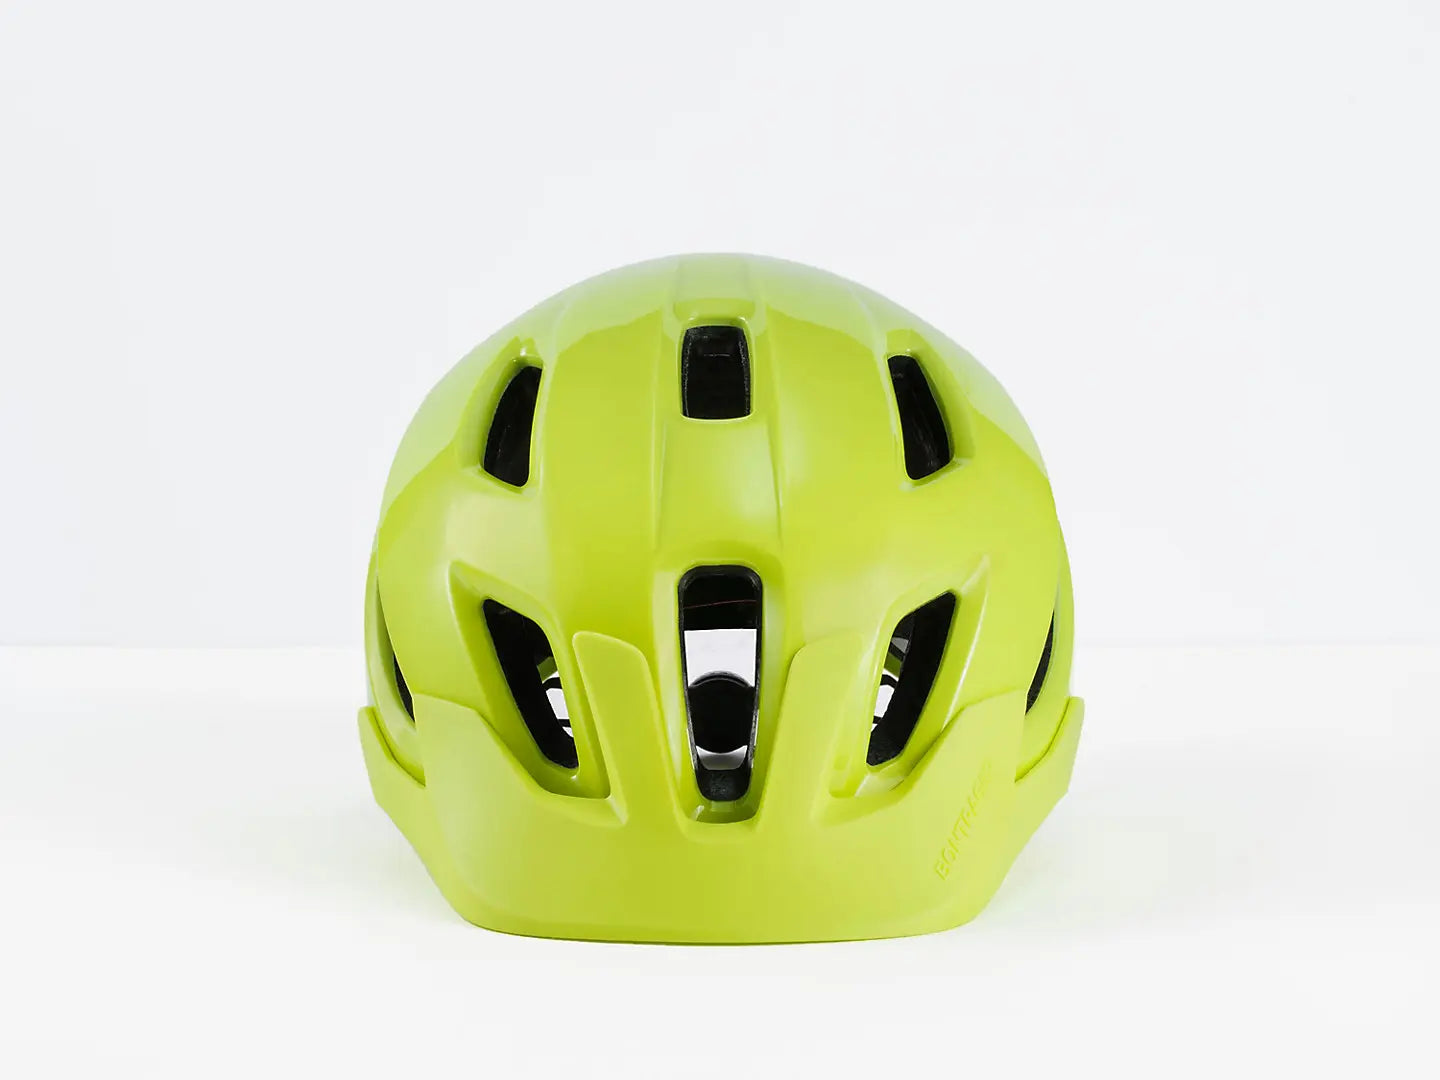 Bontrager Quantum Helmet, suitable for all riding purposes